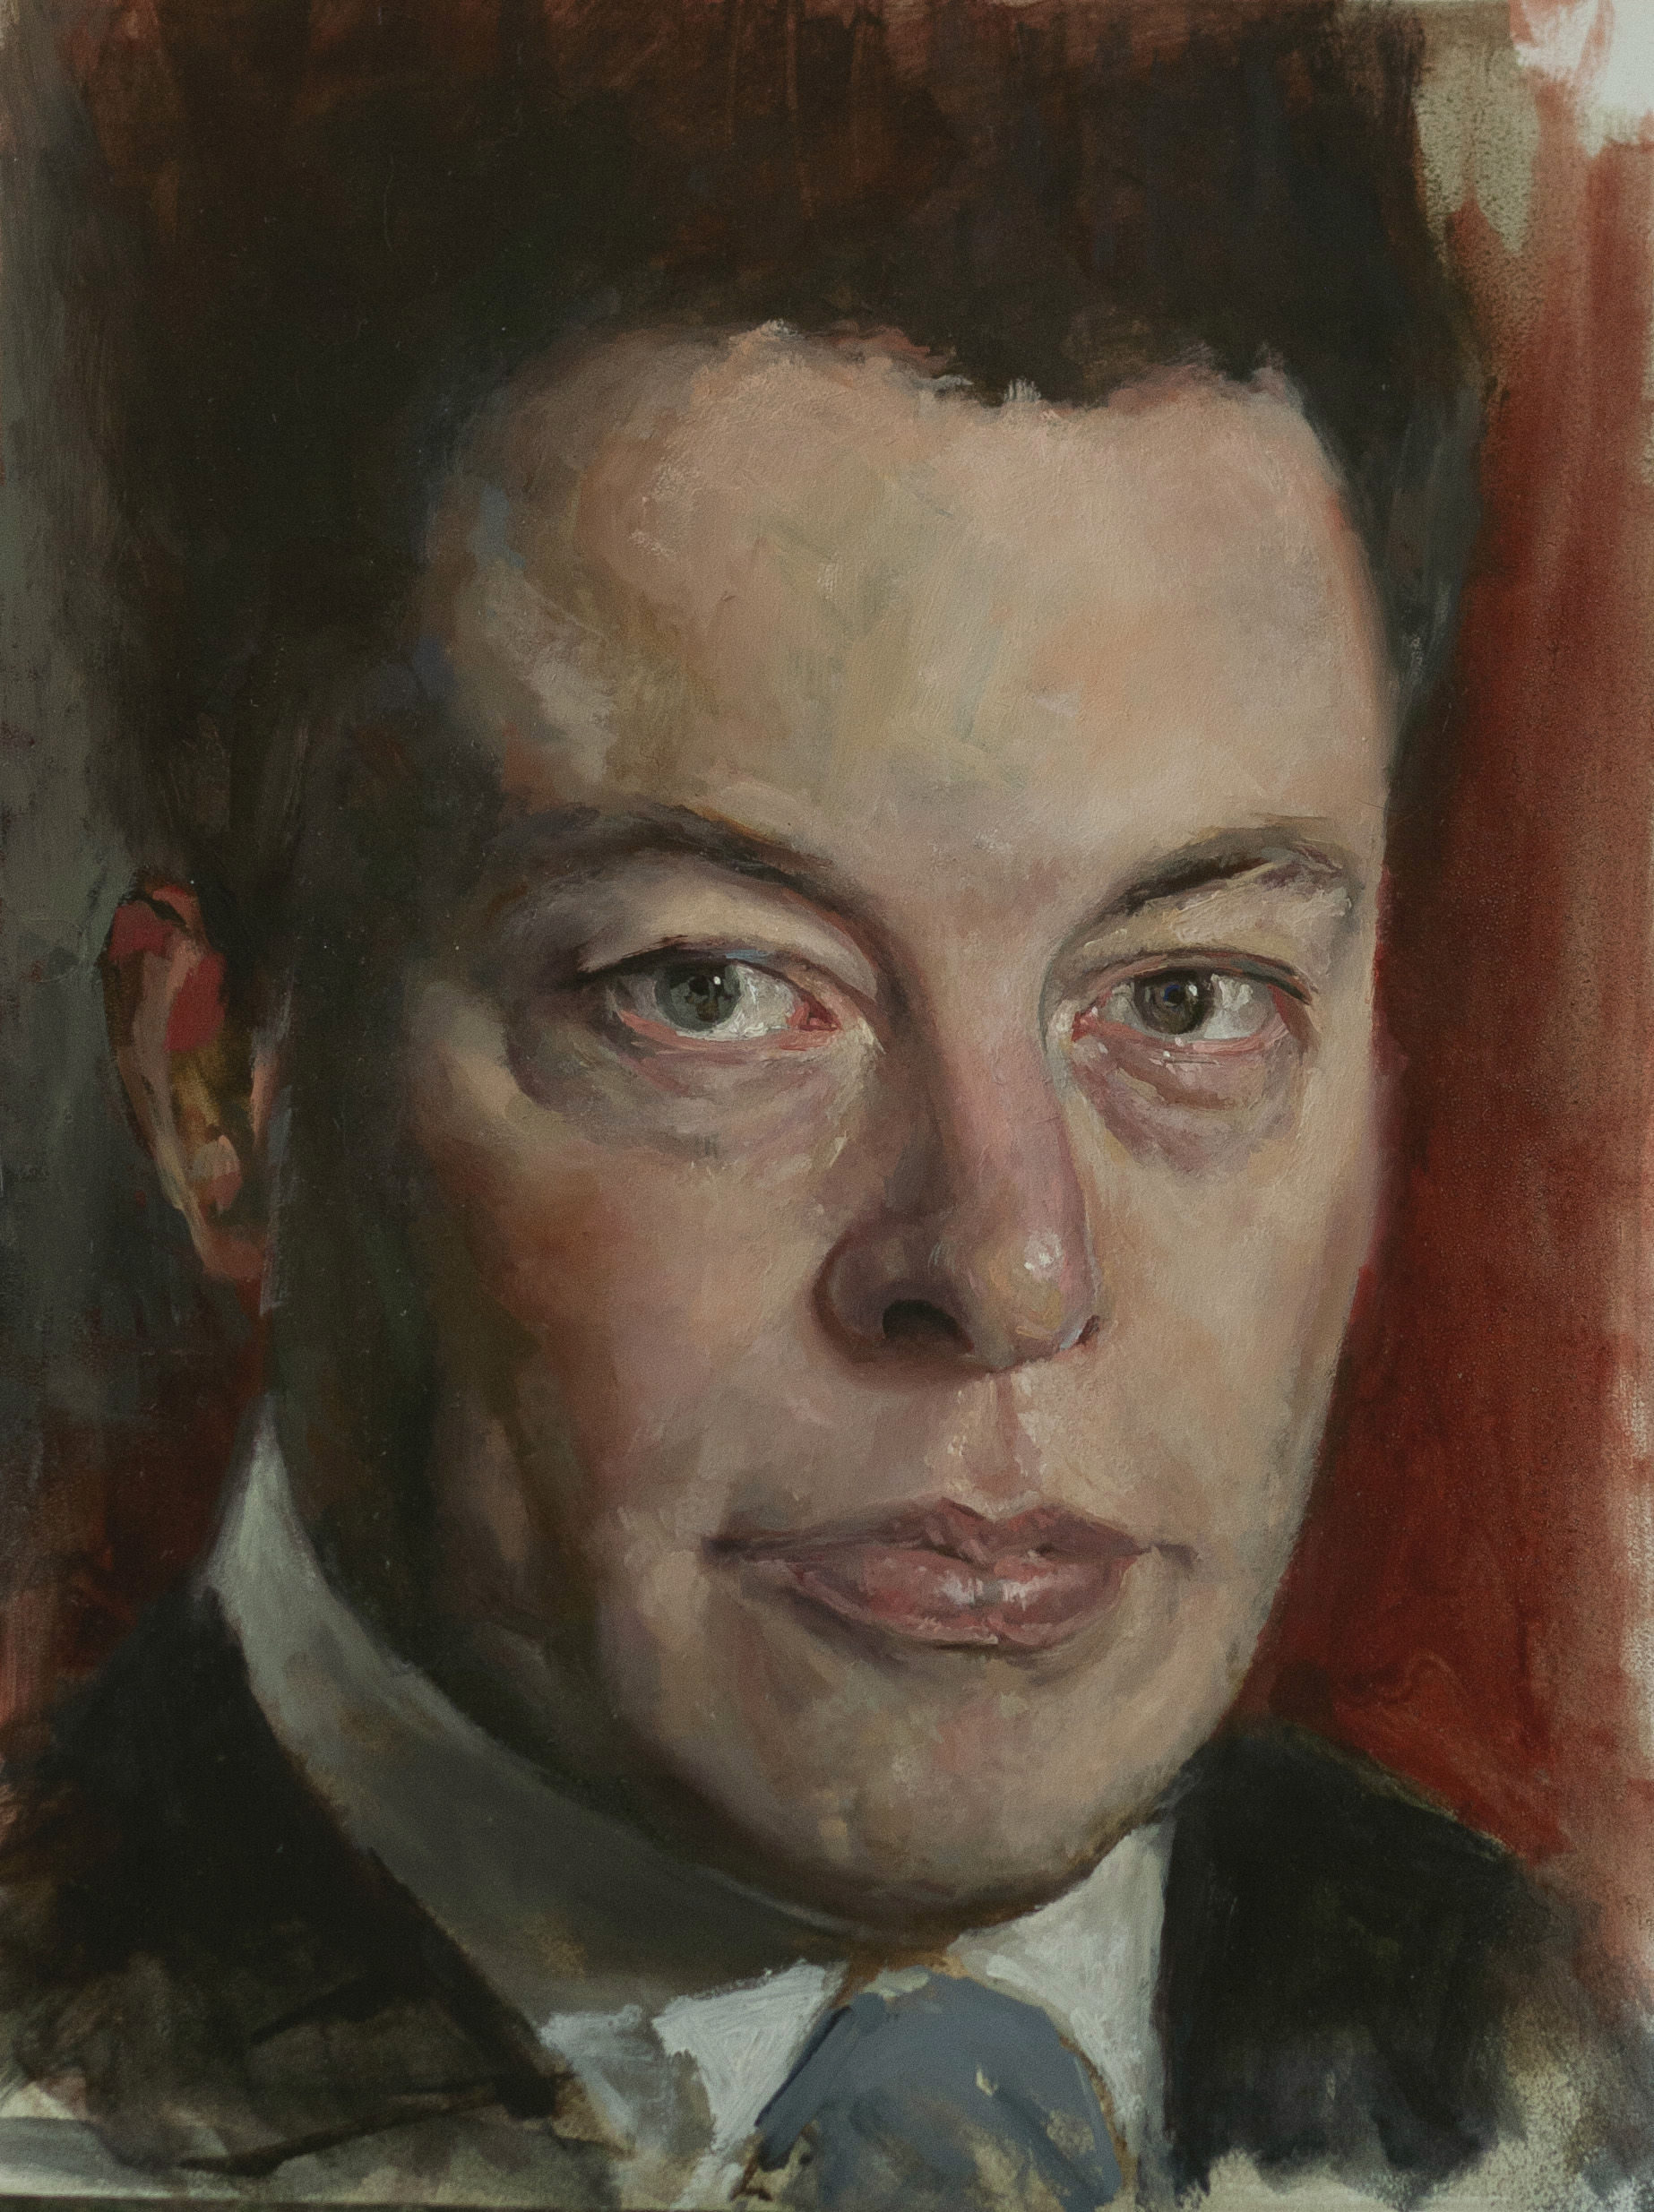 Professor Zeggert’s oil portrait of Elon Musk